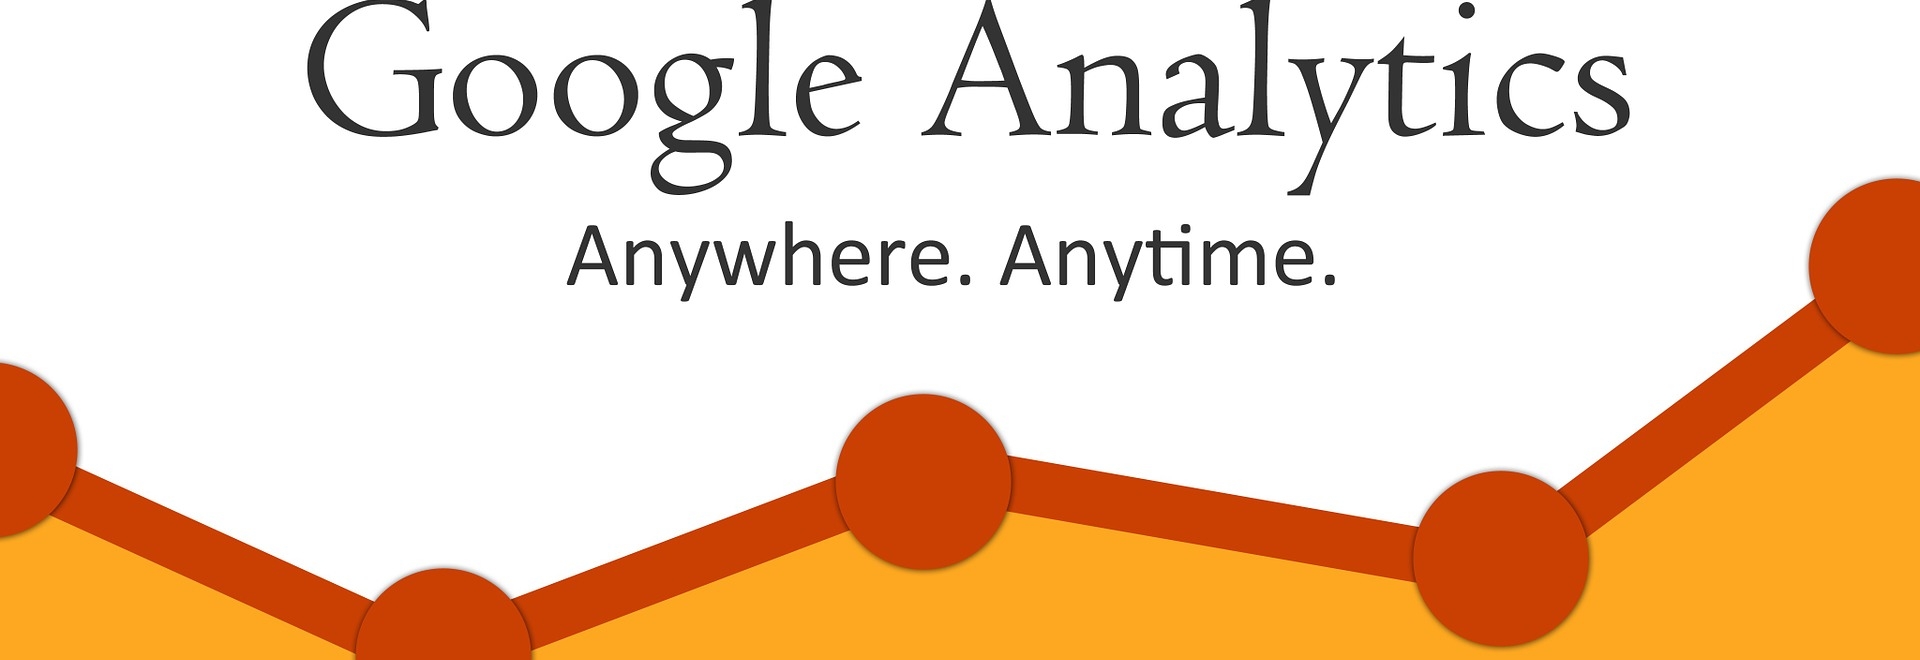 Google analytics baner